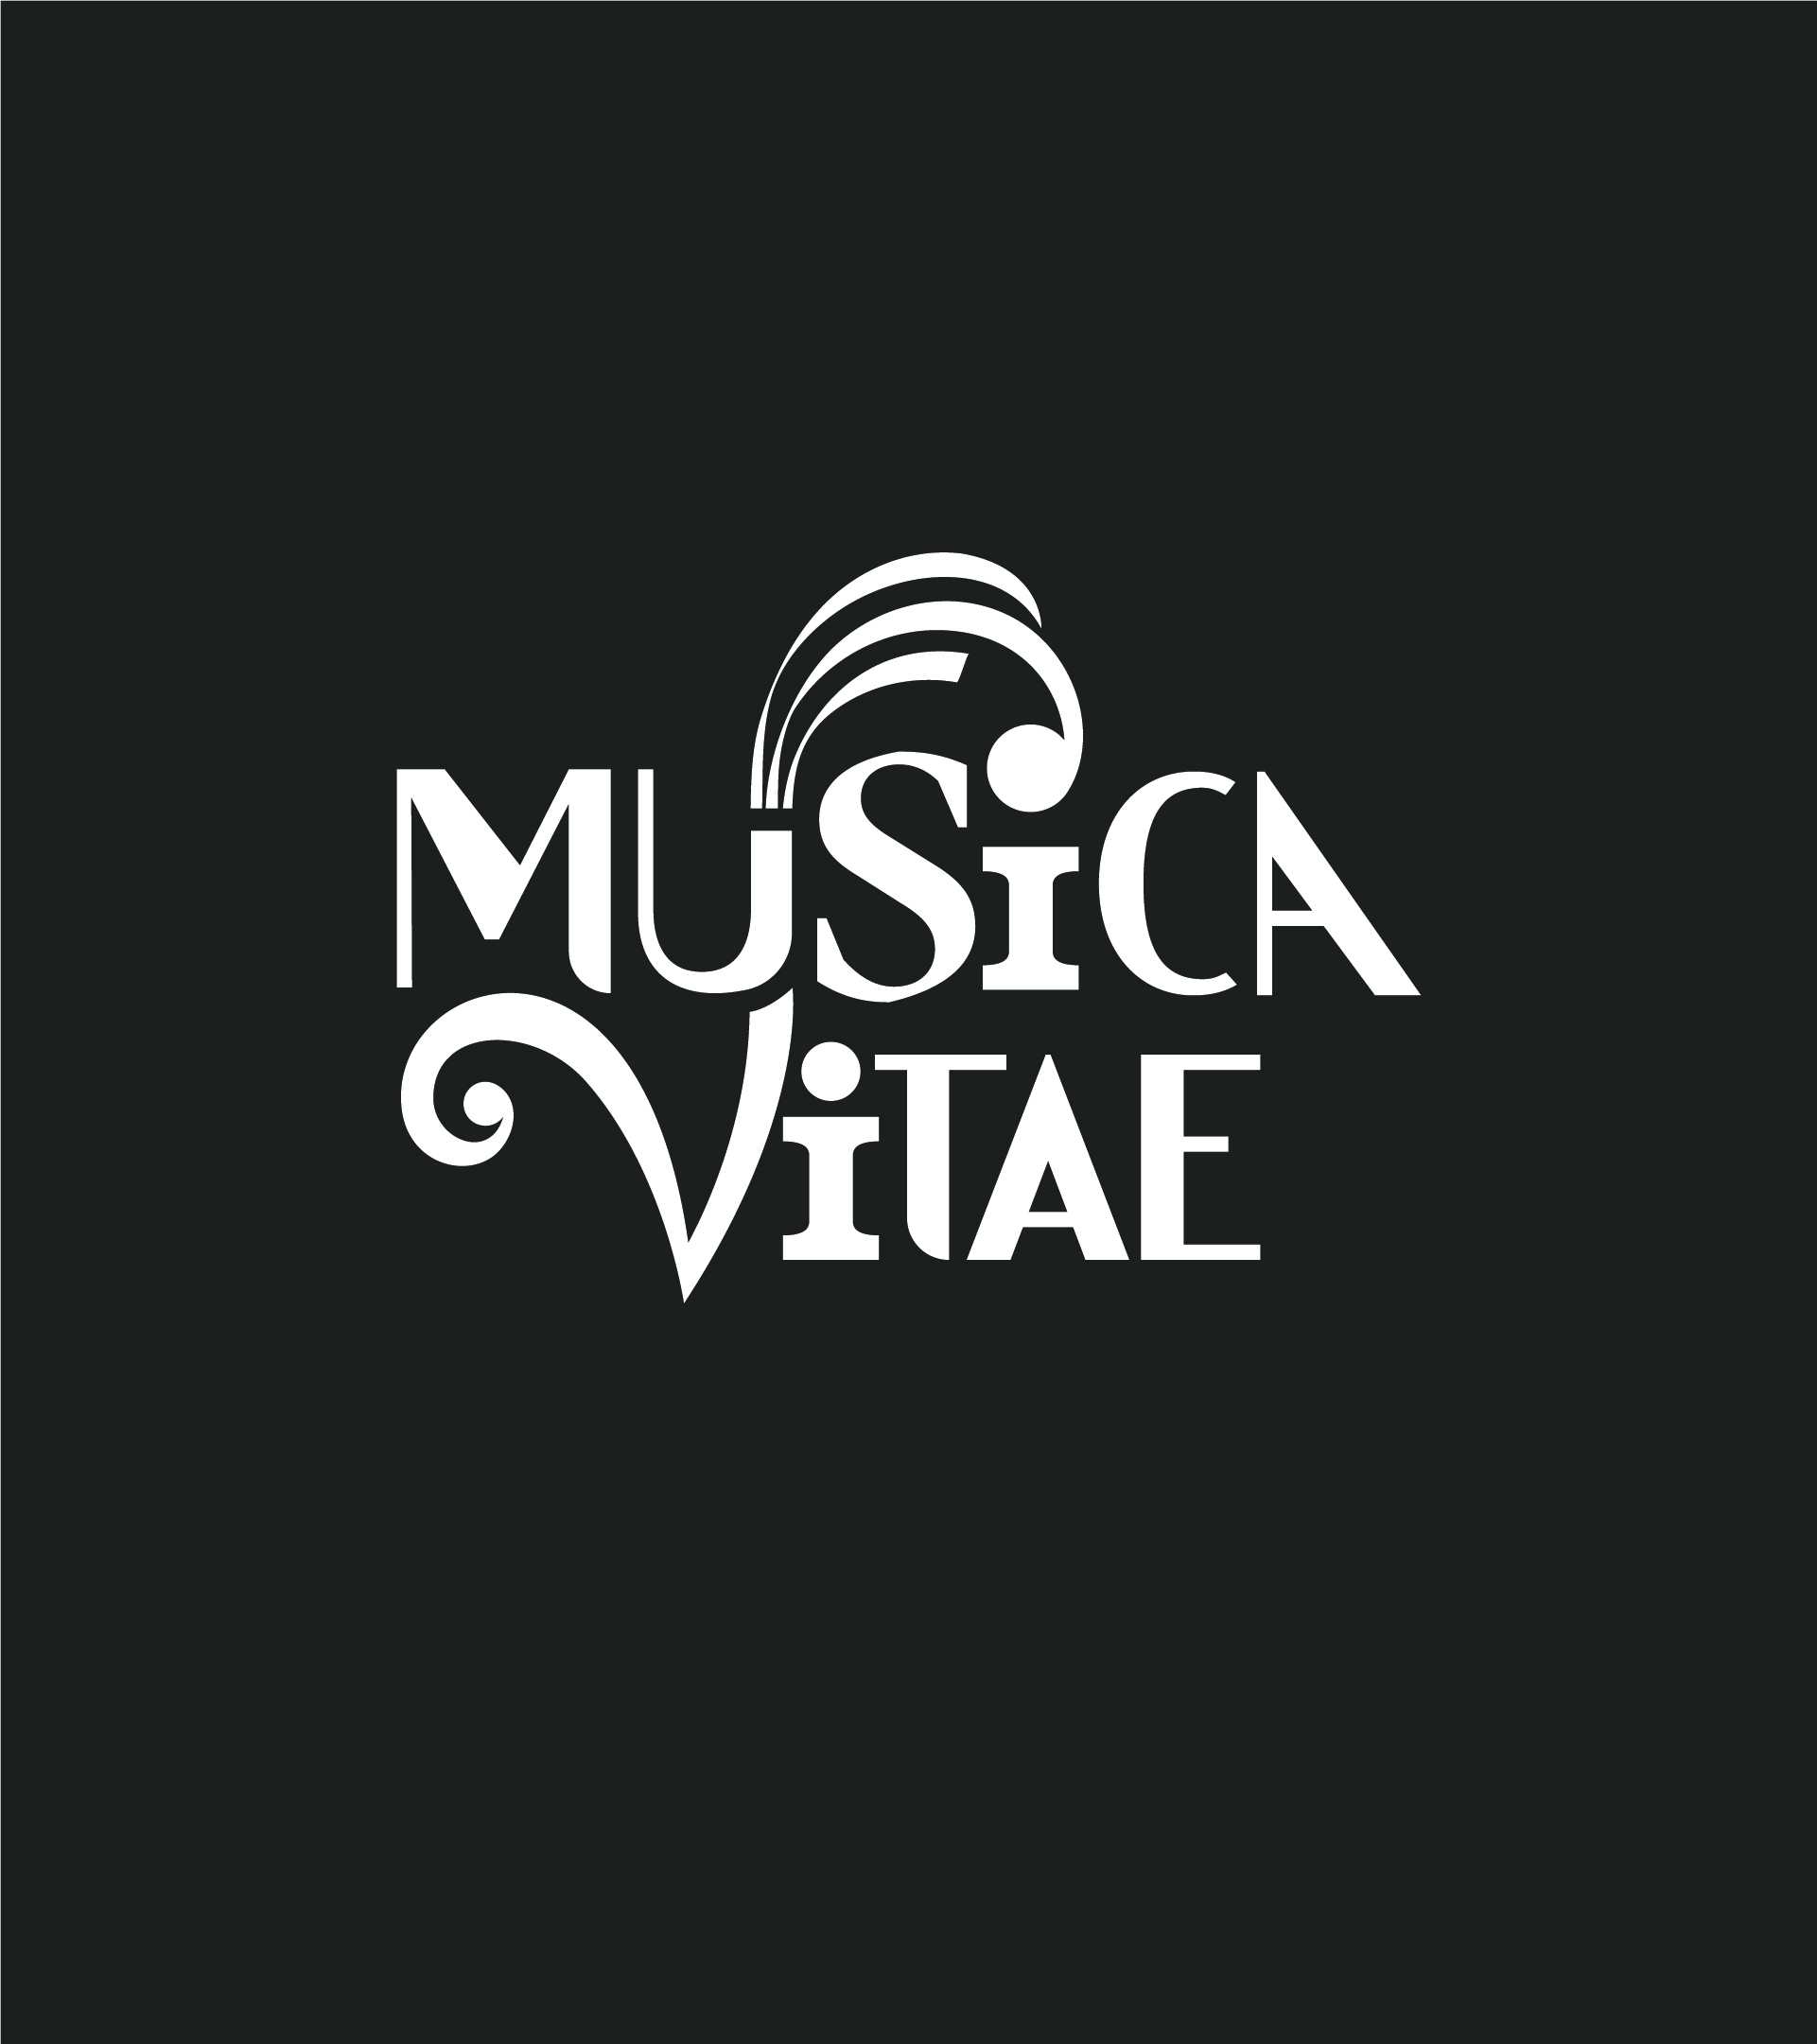 Musica Vitae logo designed by Studio Poi